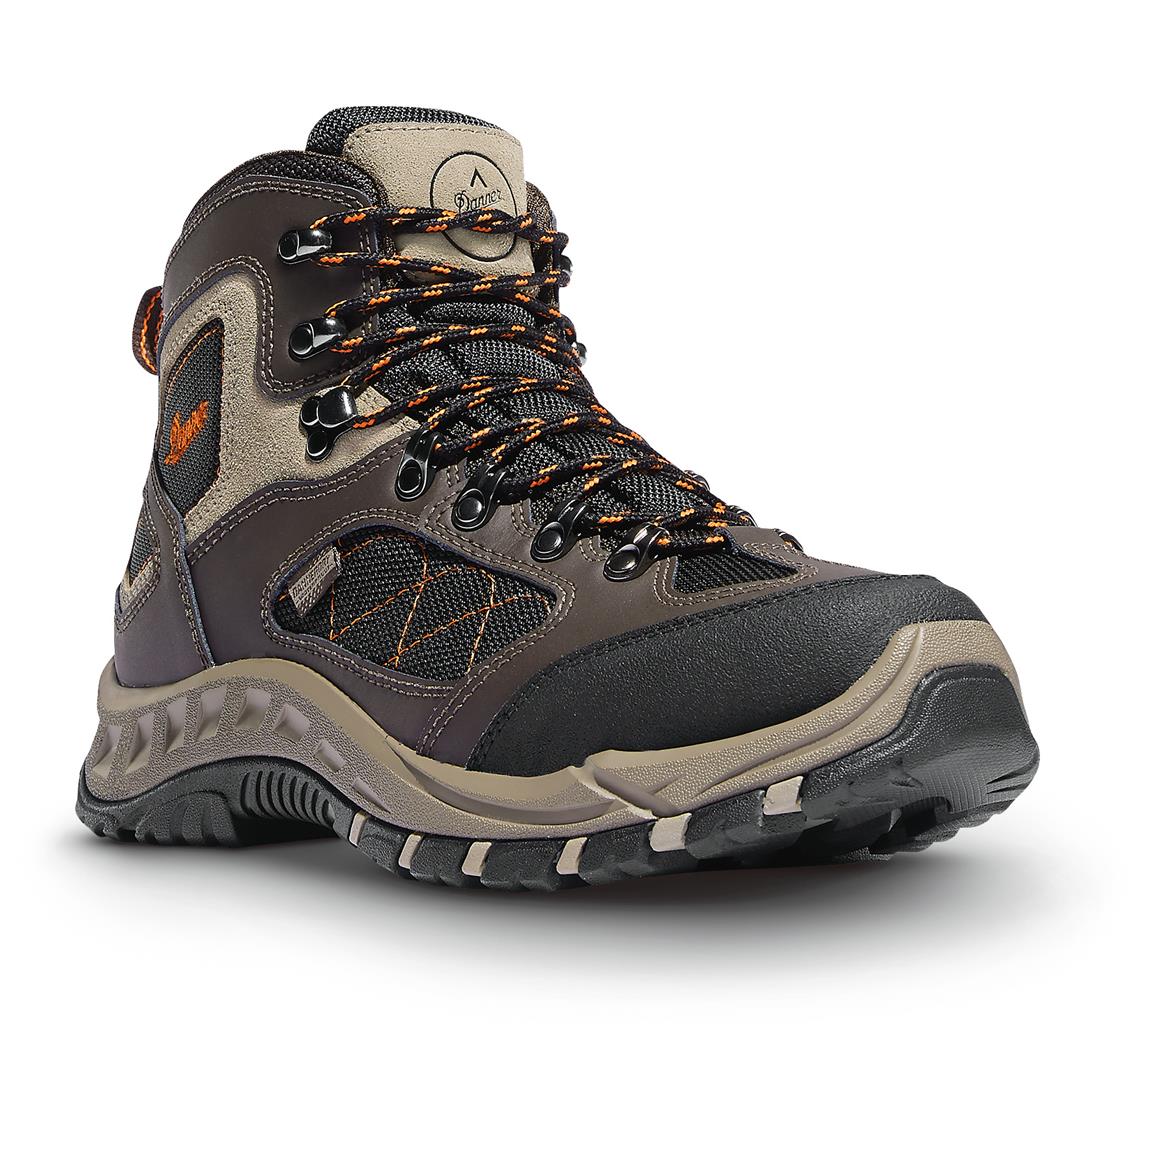 Danner Men's TrailTrek 4.5" Hiking Boots - 669570, Hiking Boots & Shoes